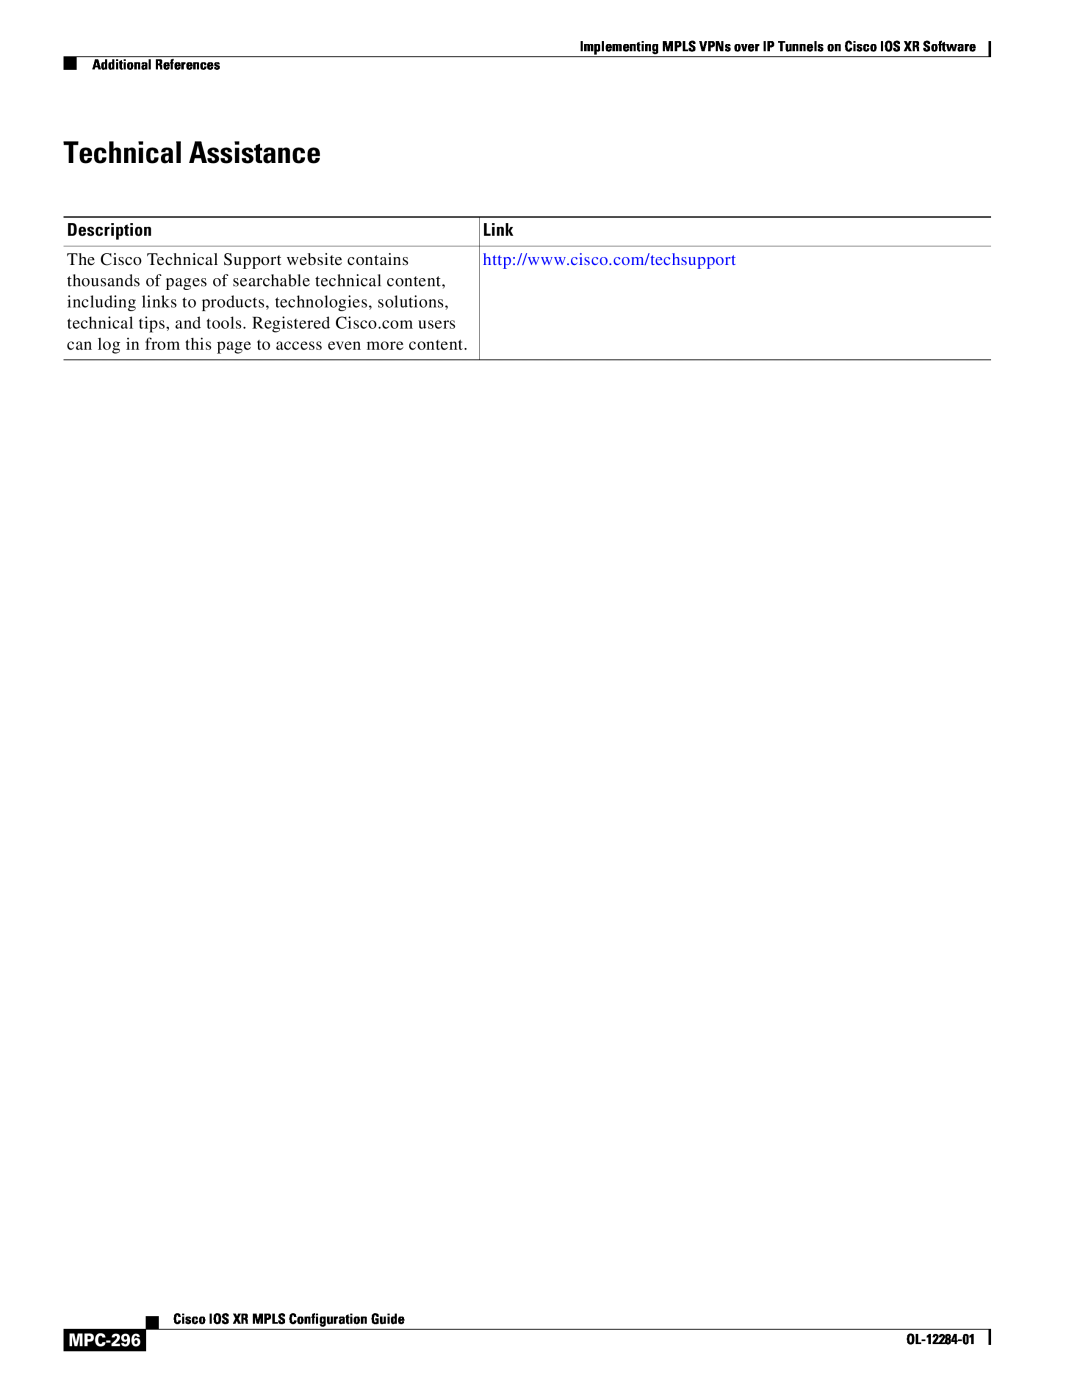 Cisco Systems MPC-273 manual Technical Assistance, Description, Link, MPC-296 